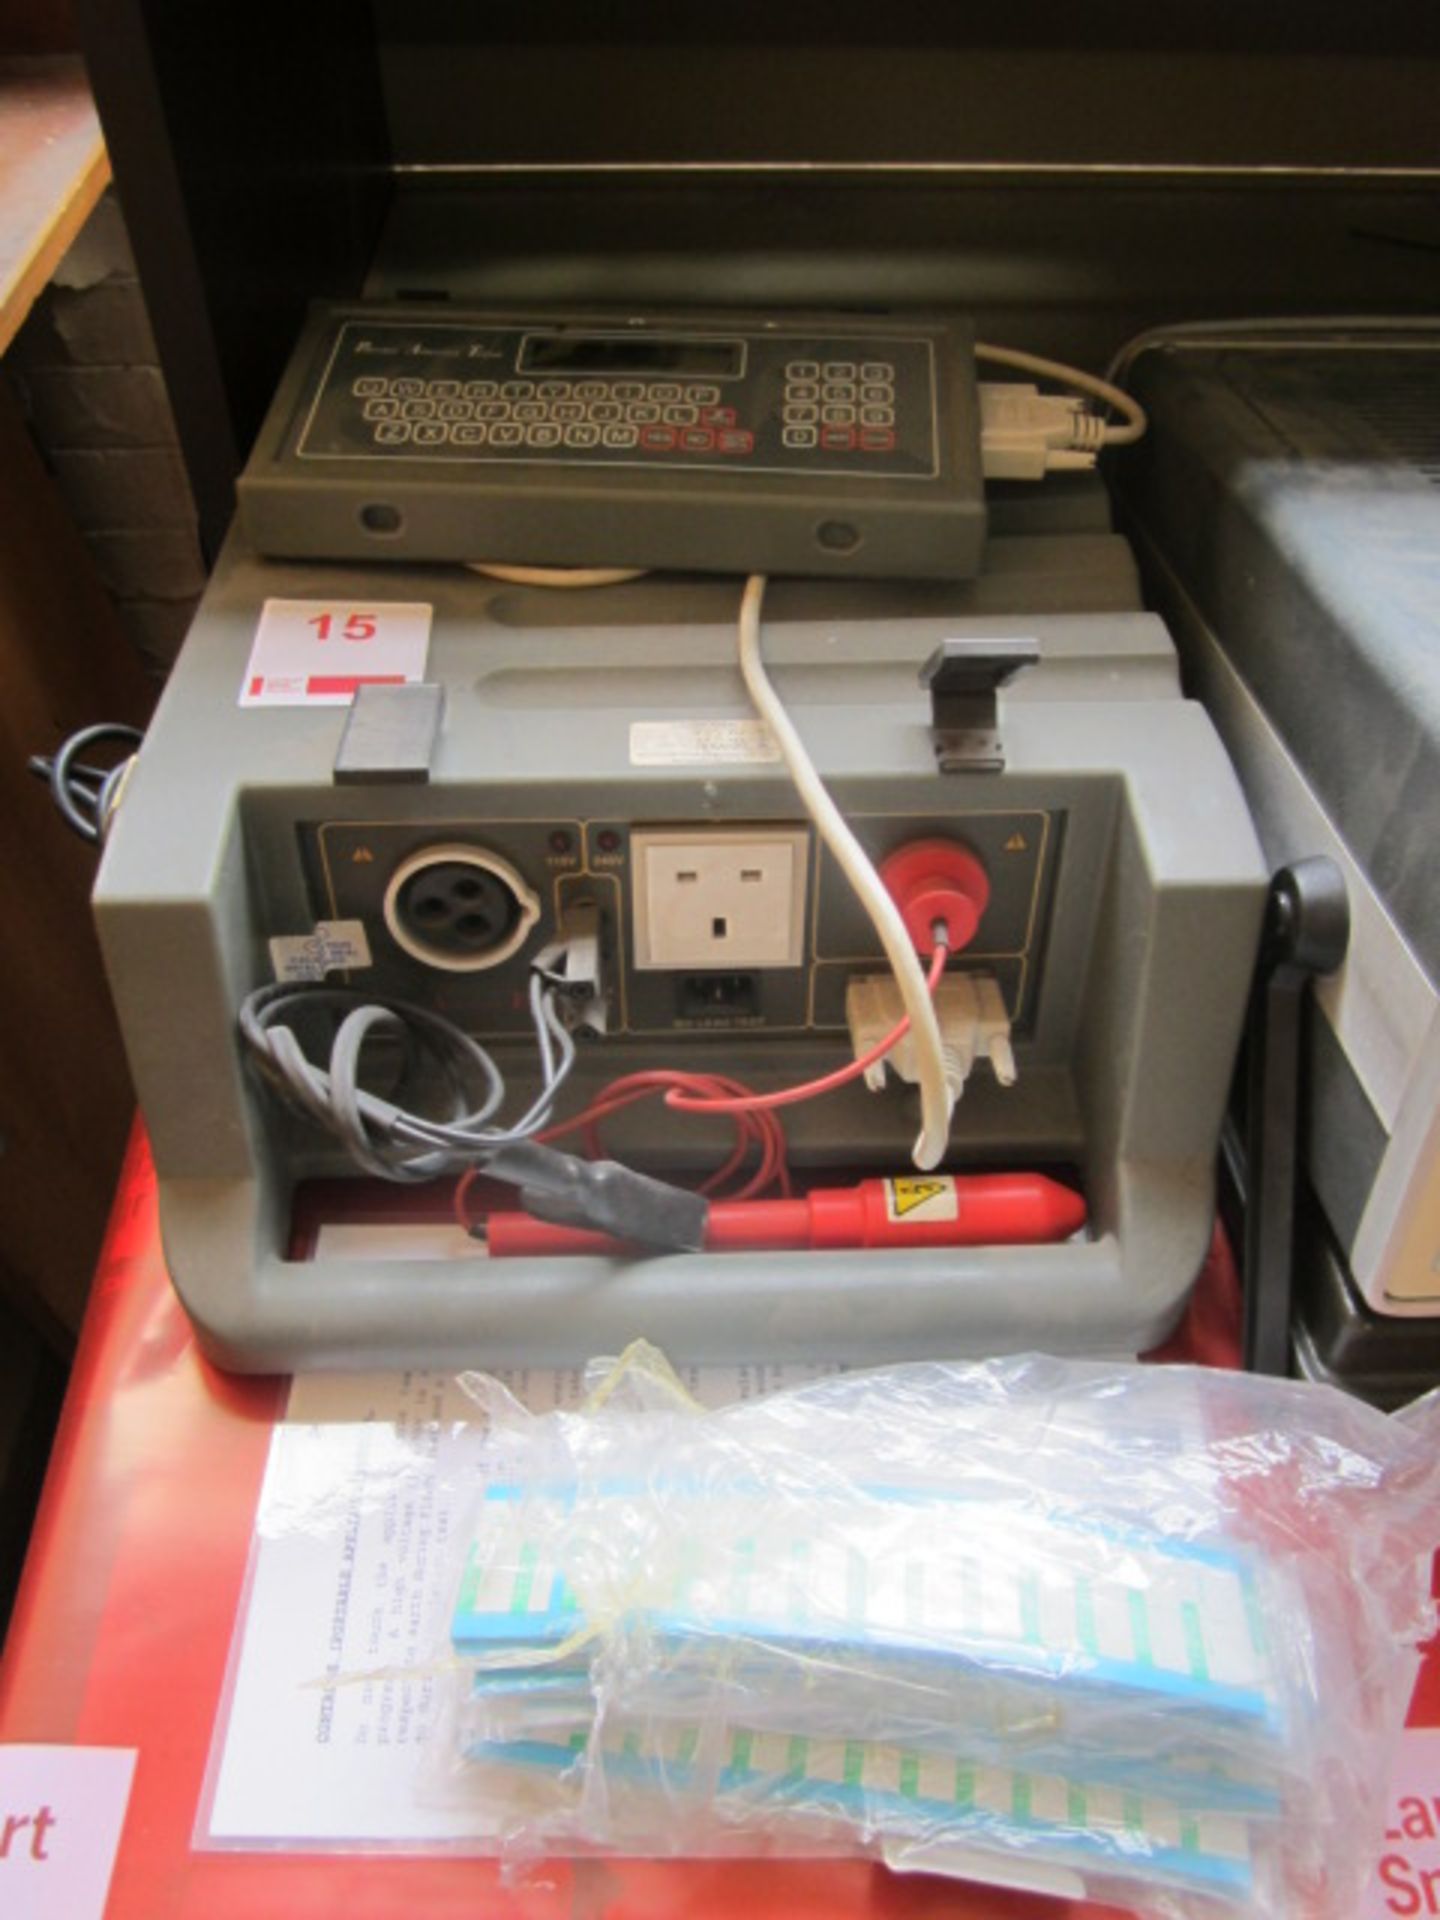 Controls portable appliance tester